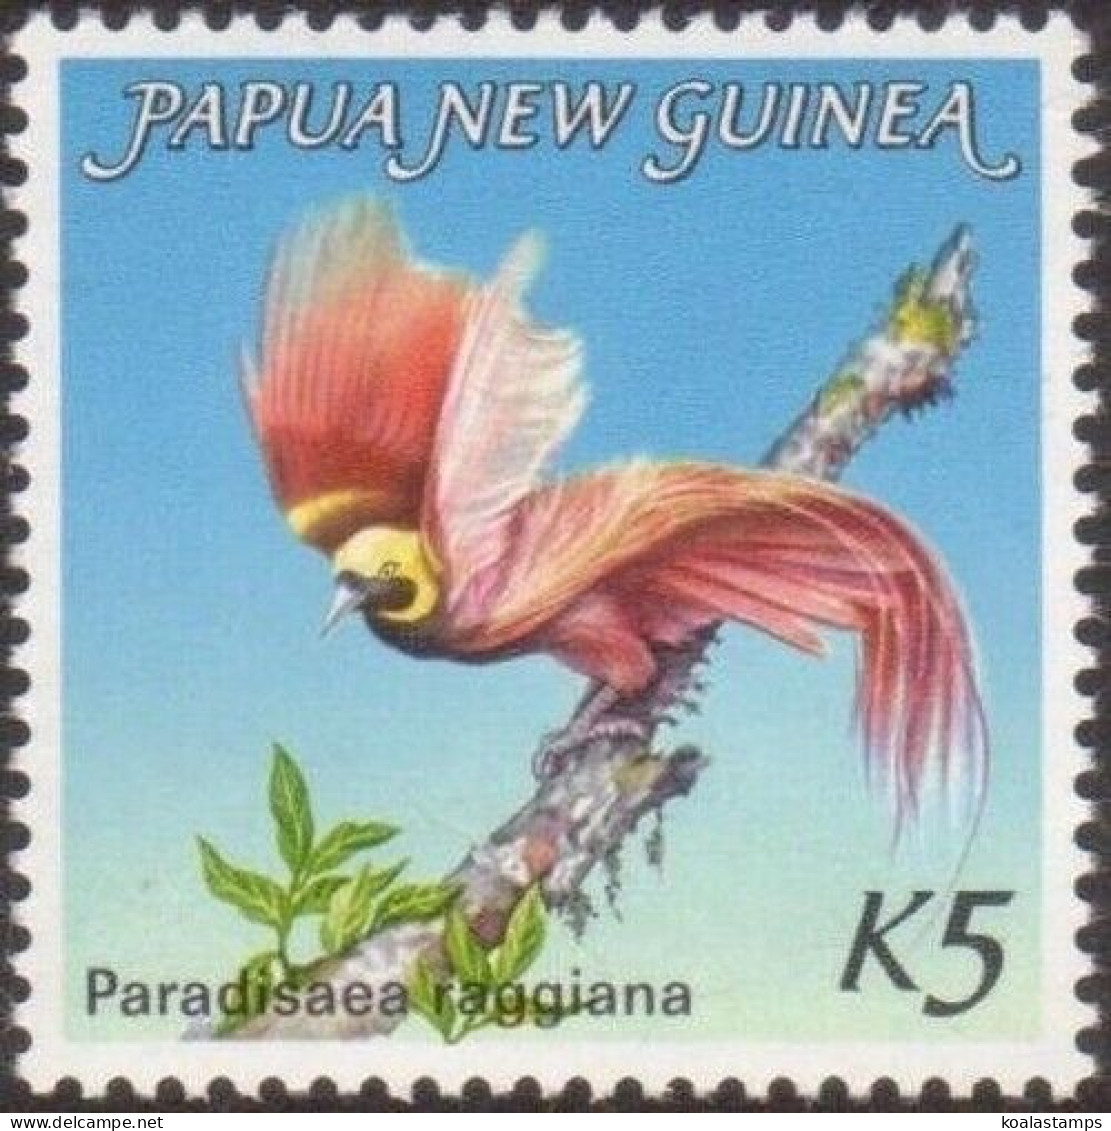 Papua New Guinea 1984 SG452 5k Raggiana Bird Of Paradise MNH - Papua New Guinea